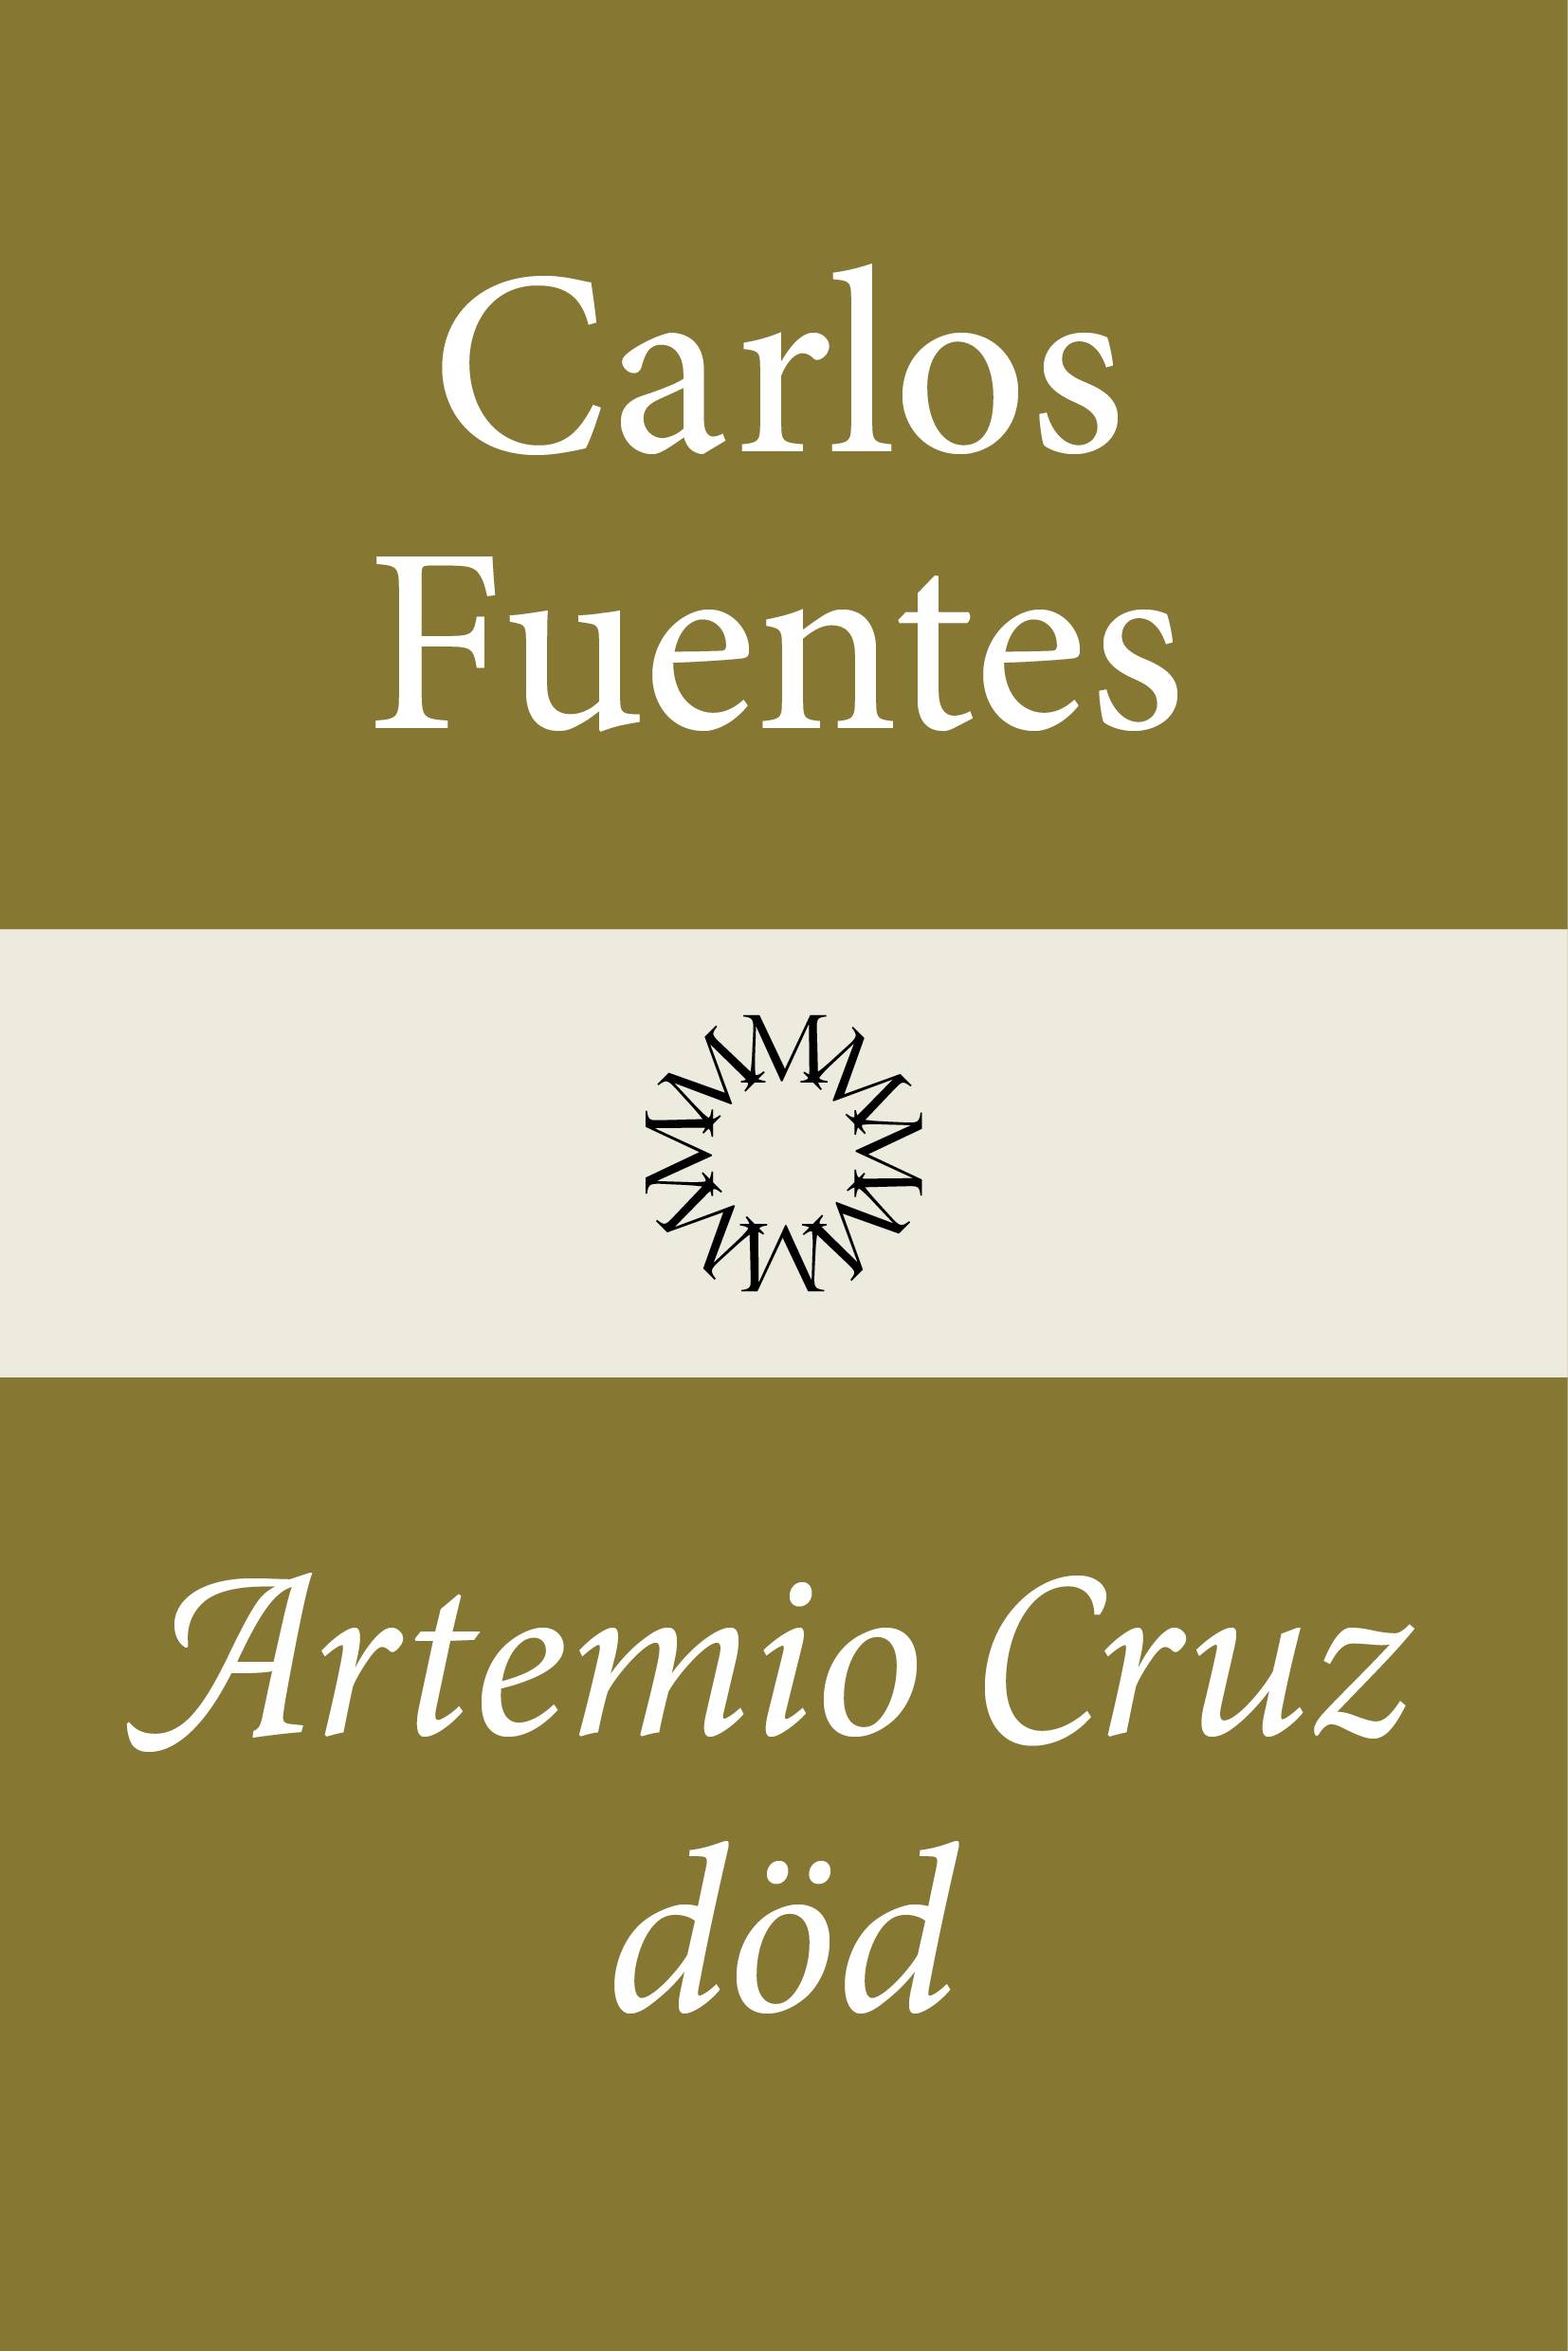 Artemio Cruz död